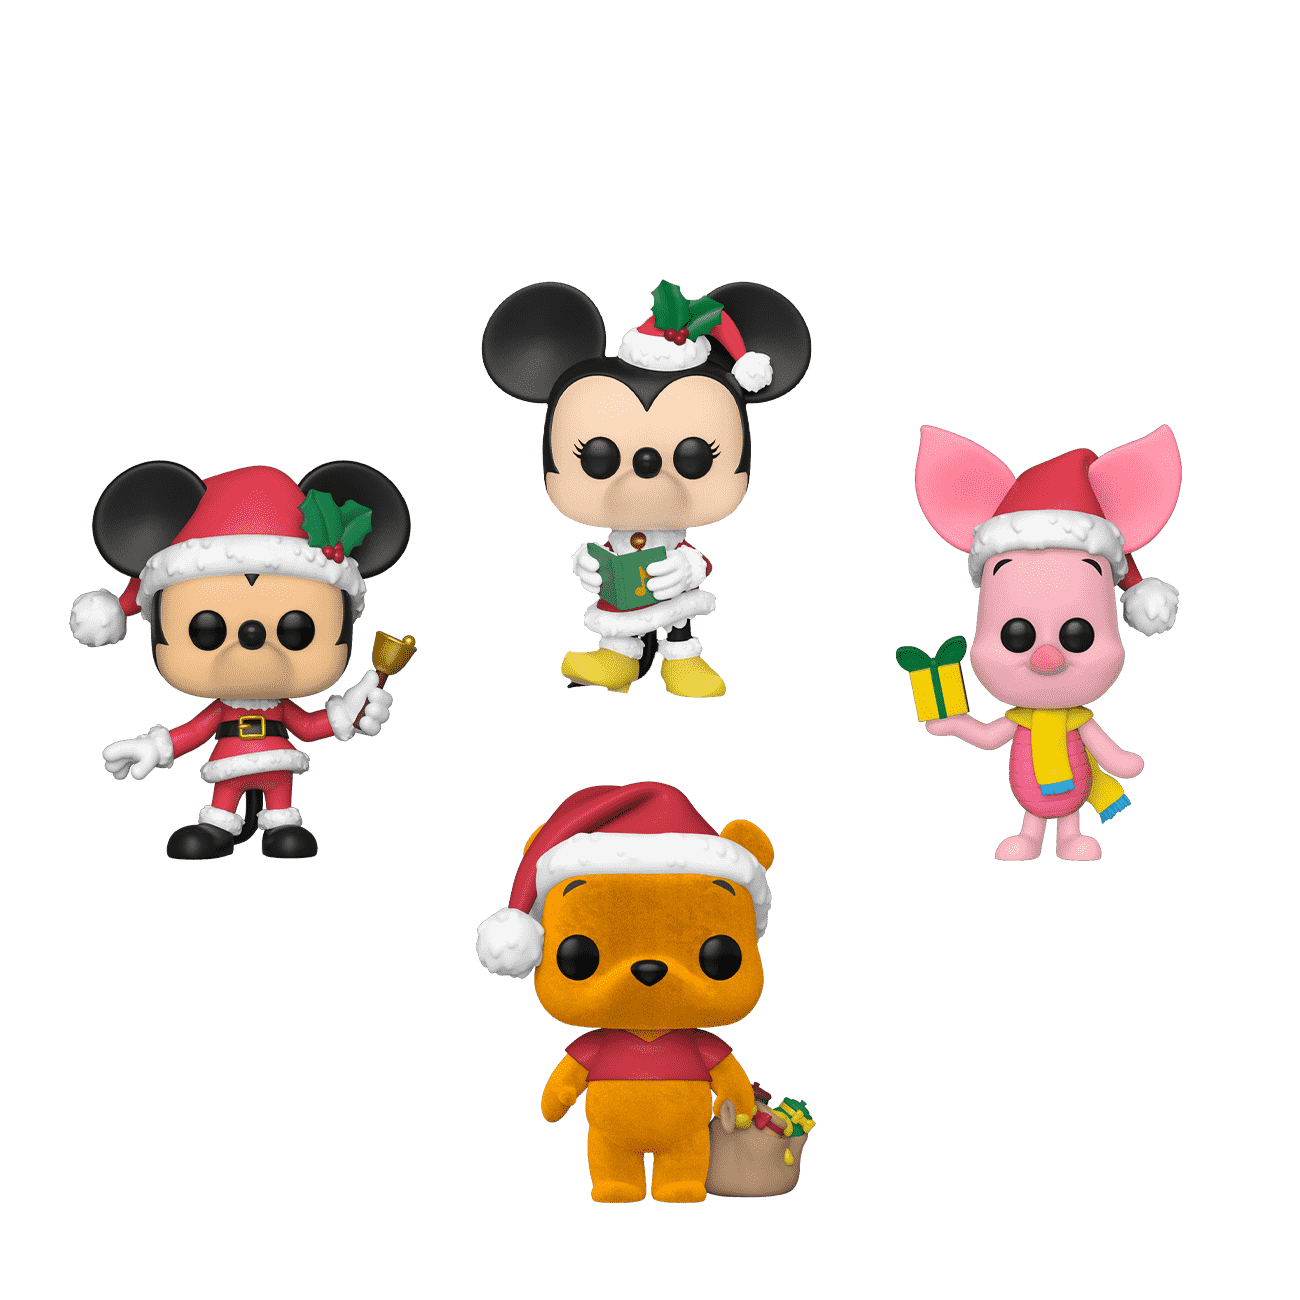 Buy Pop! Disney Holiday (Flocked) 4-Pack at Funko.